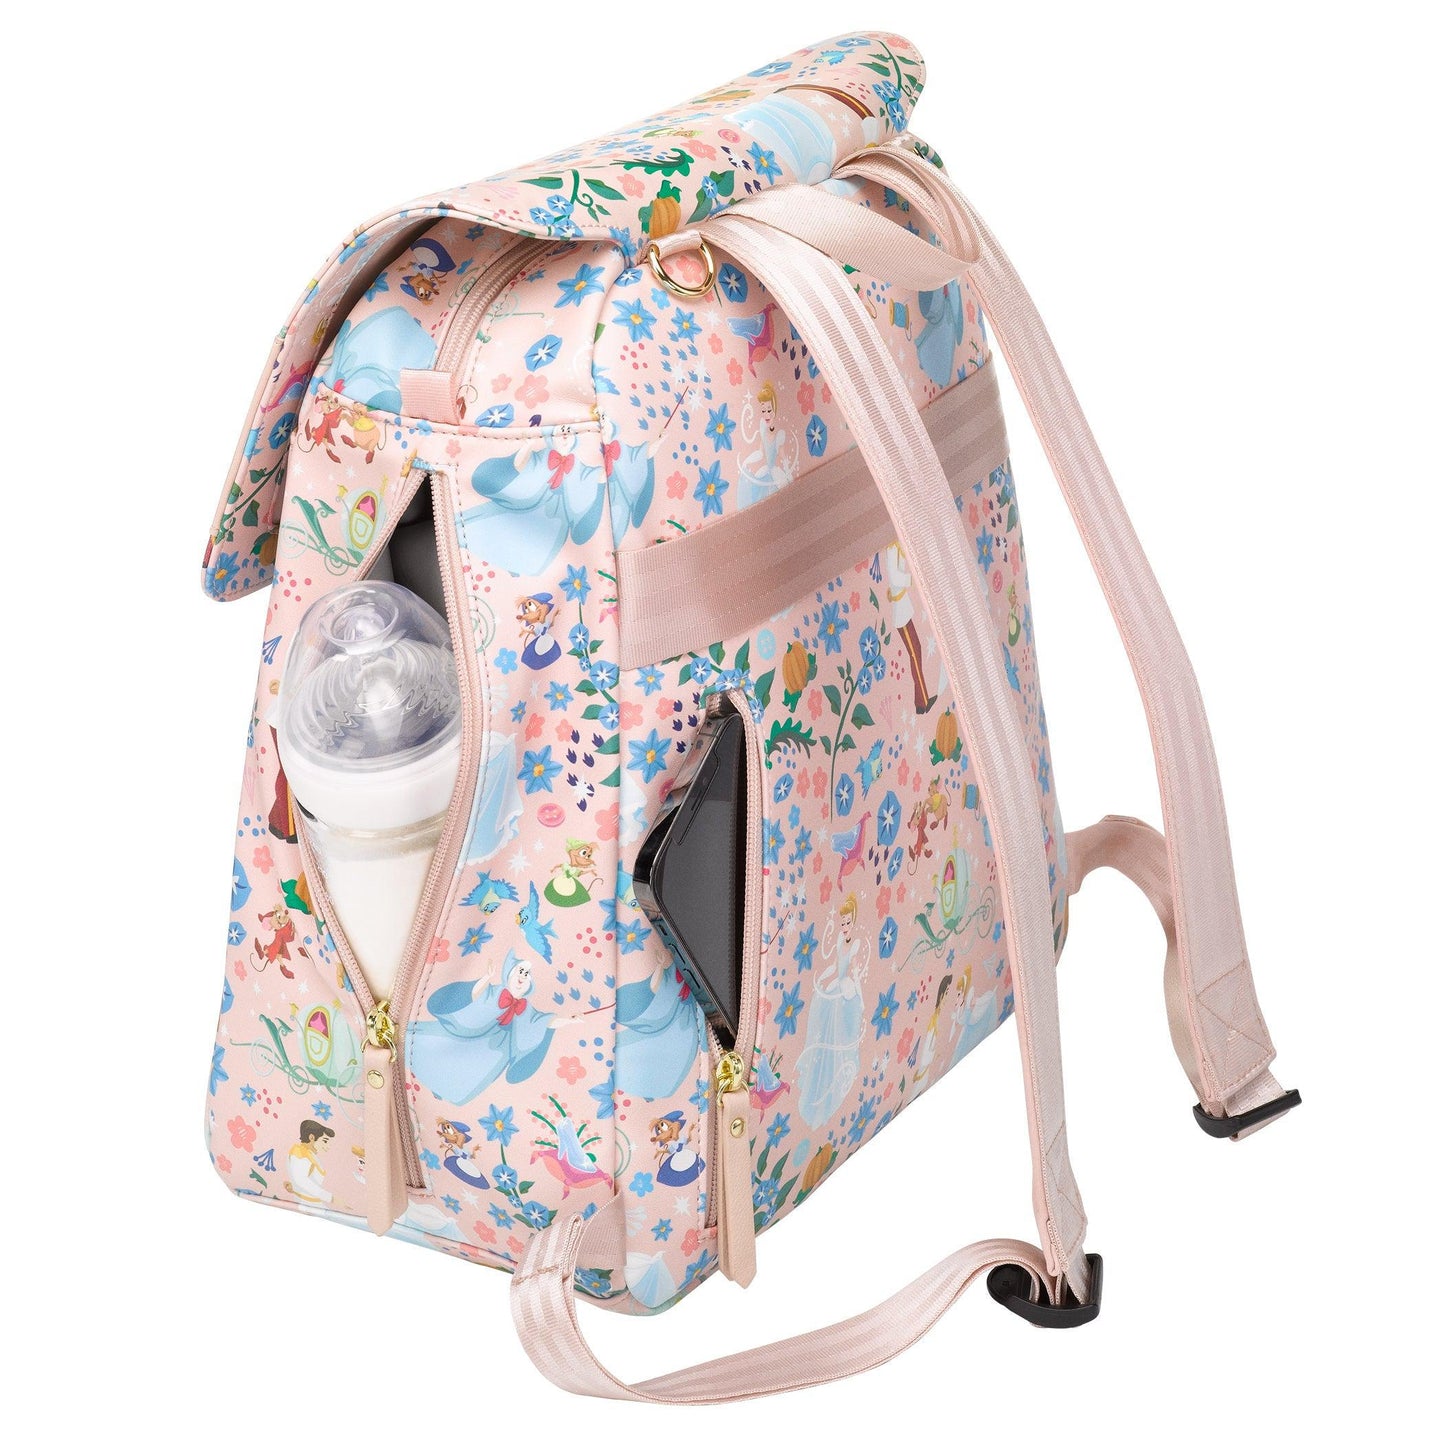 Petunia Pickle Bottom Meta Diaper Backpack in Disney's Cinderella